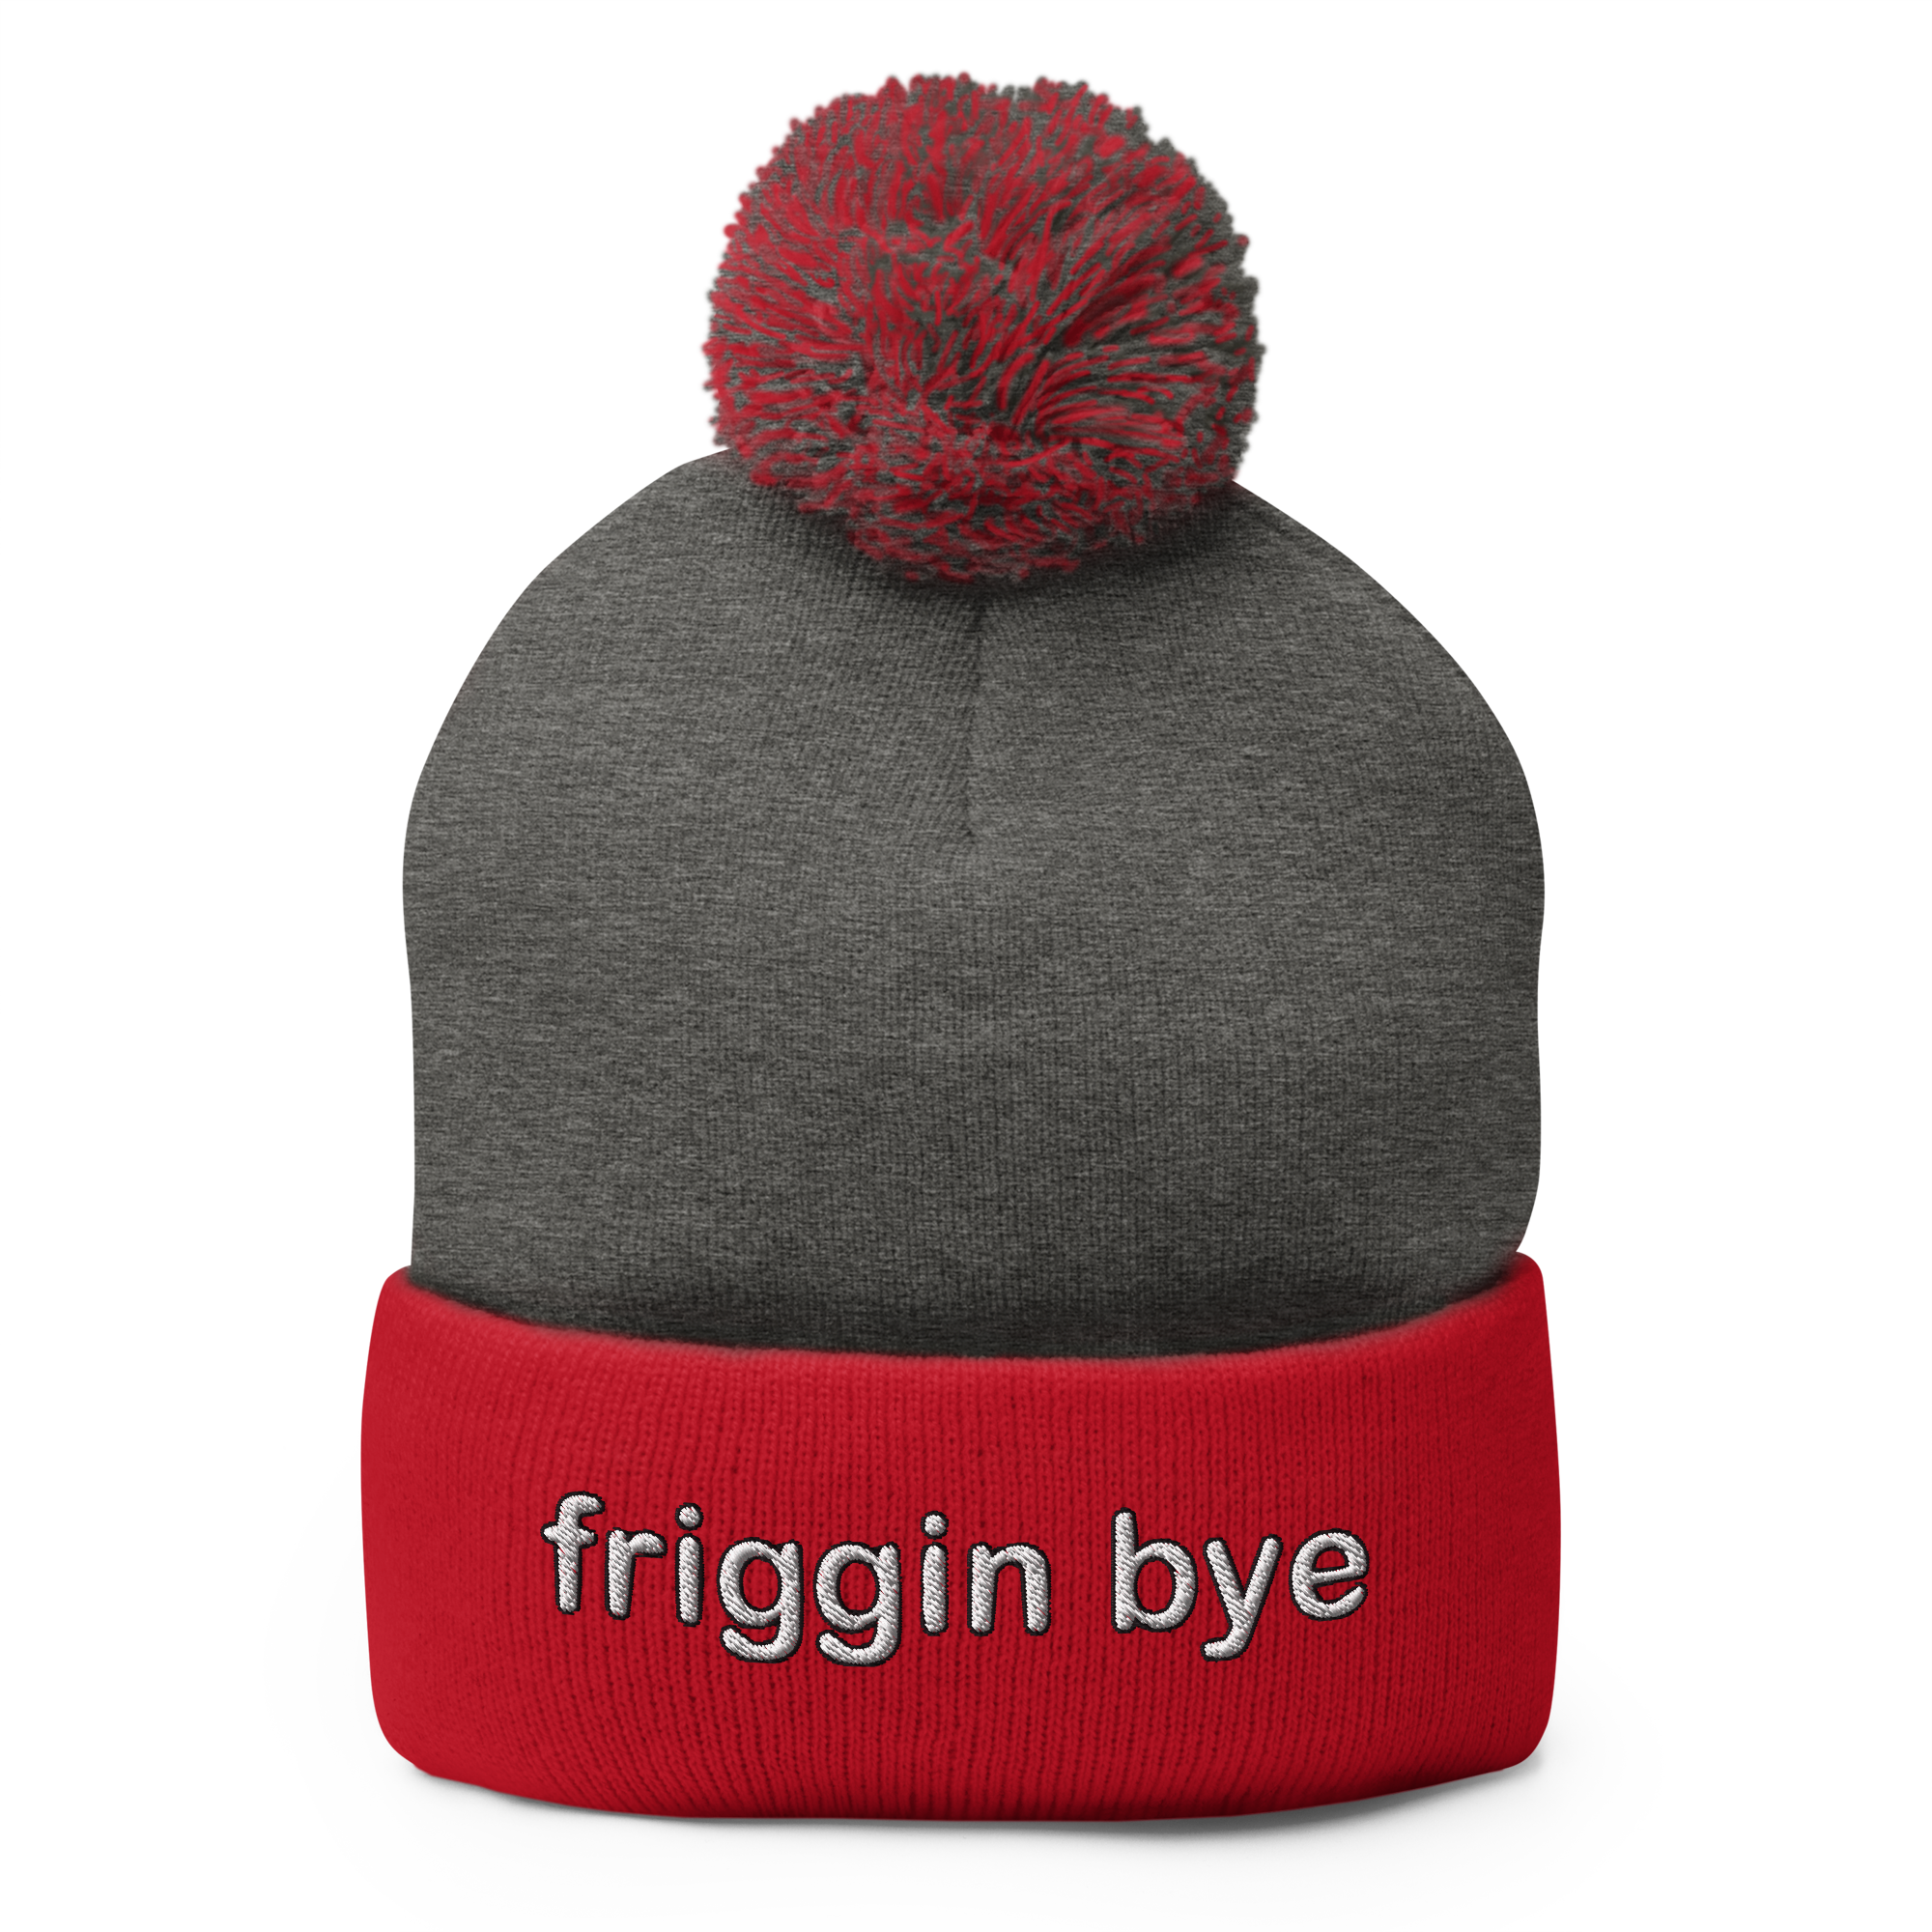 Friggin Bye Embroidered Adult Beanie Pom-Pom Hat Black